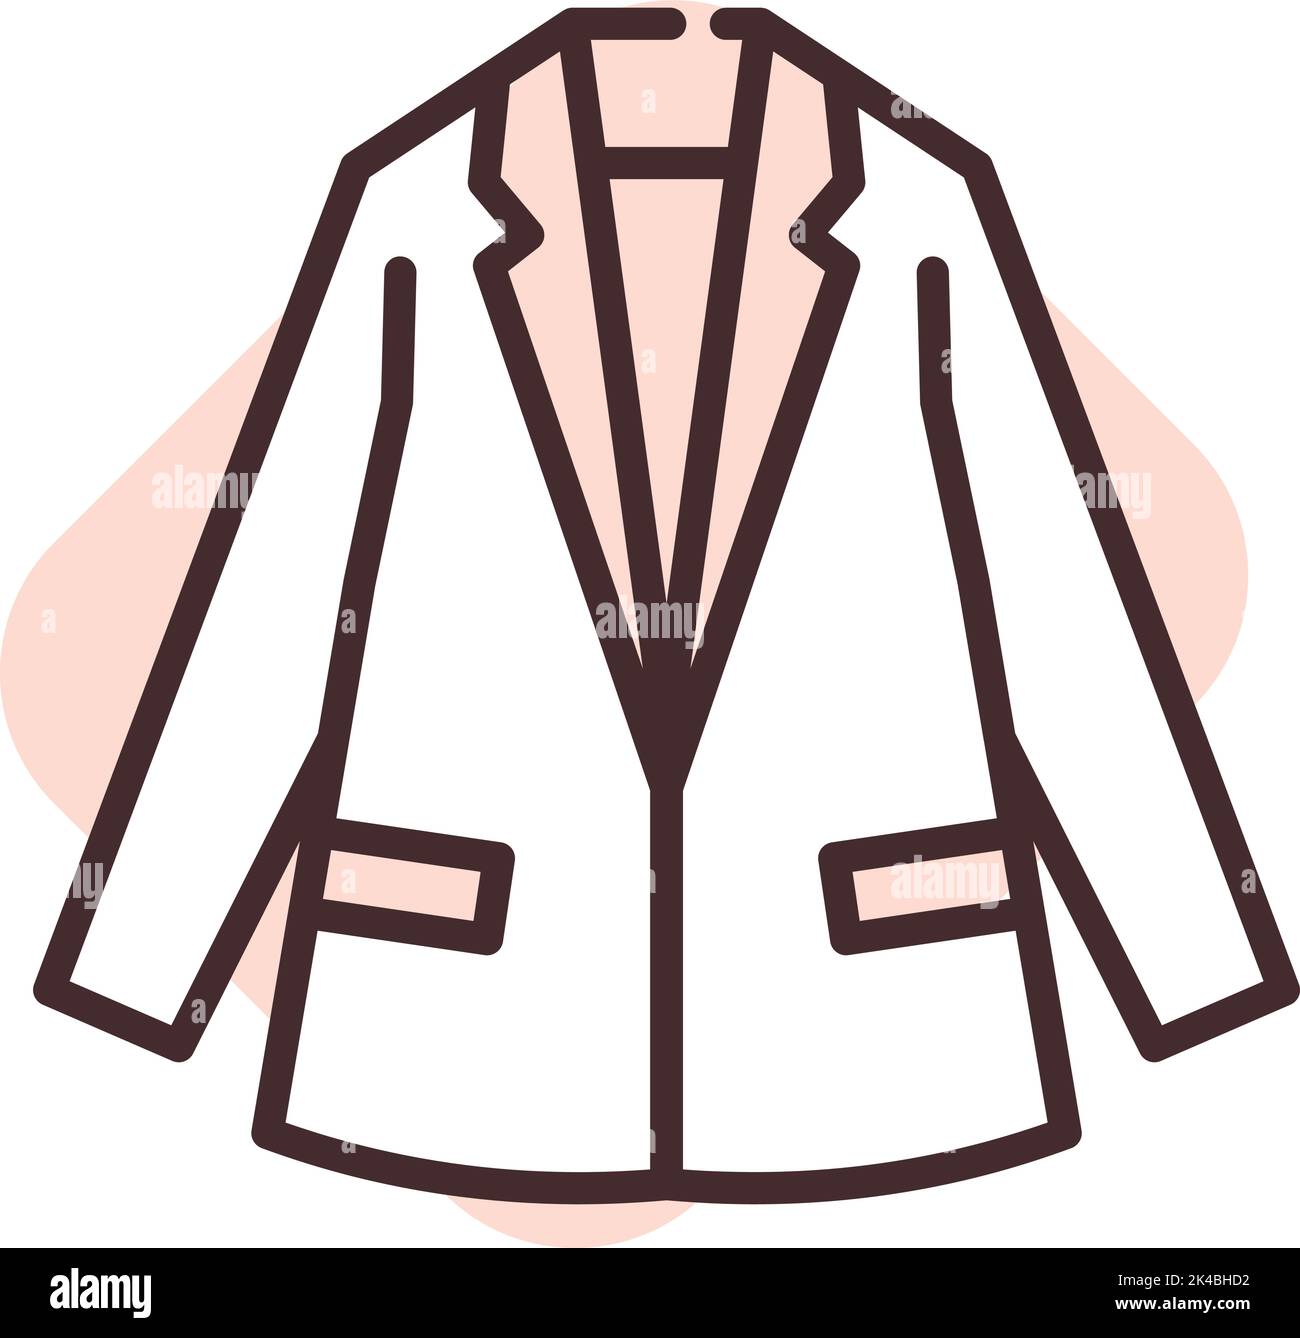 Clothing blazer jacket, illustration, vector on white background. Stock Vector